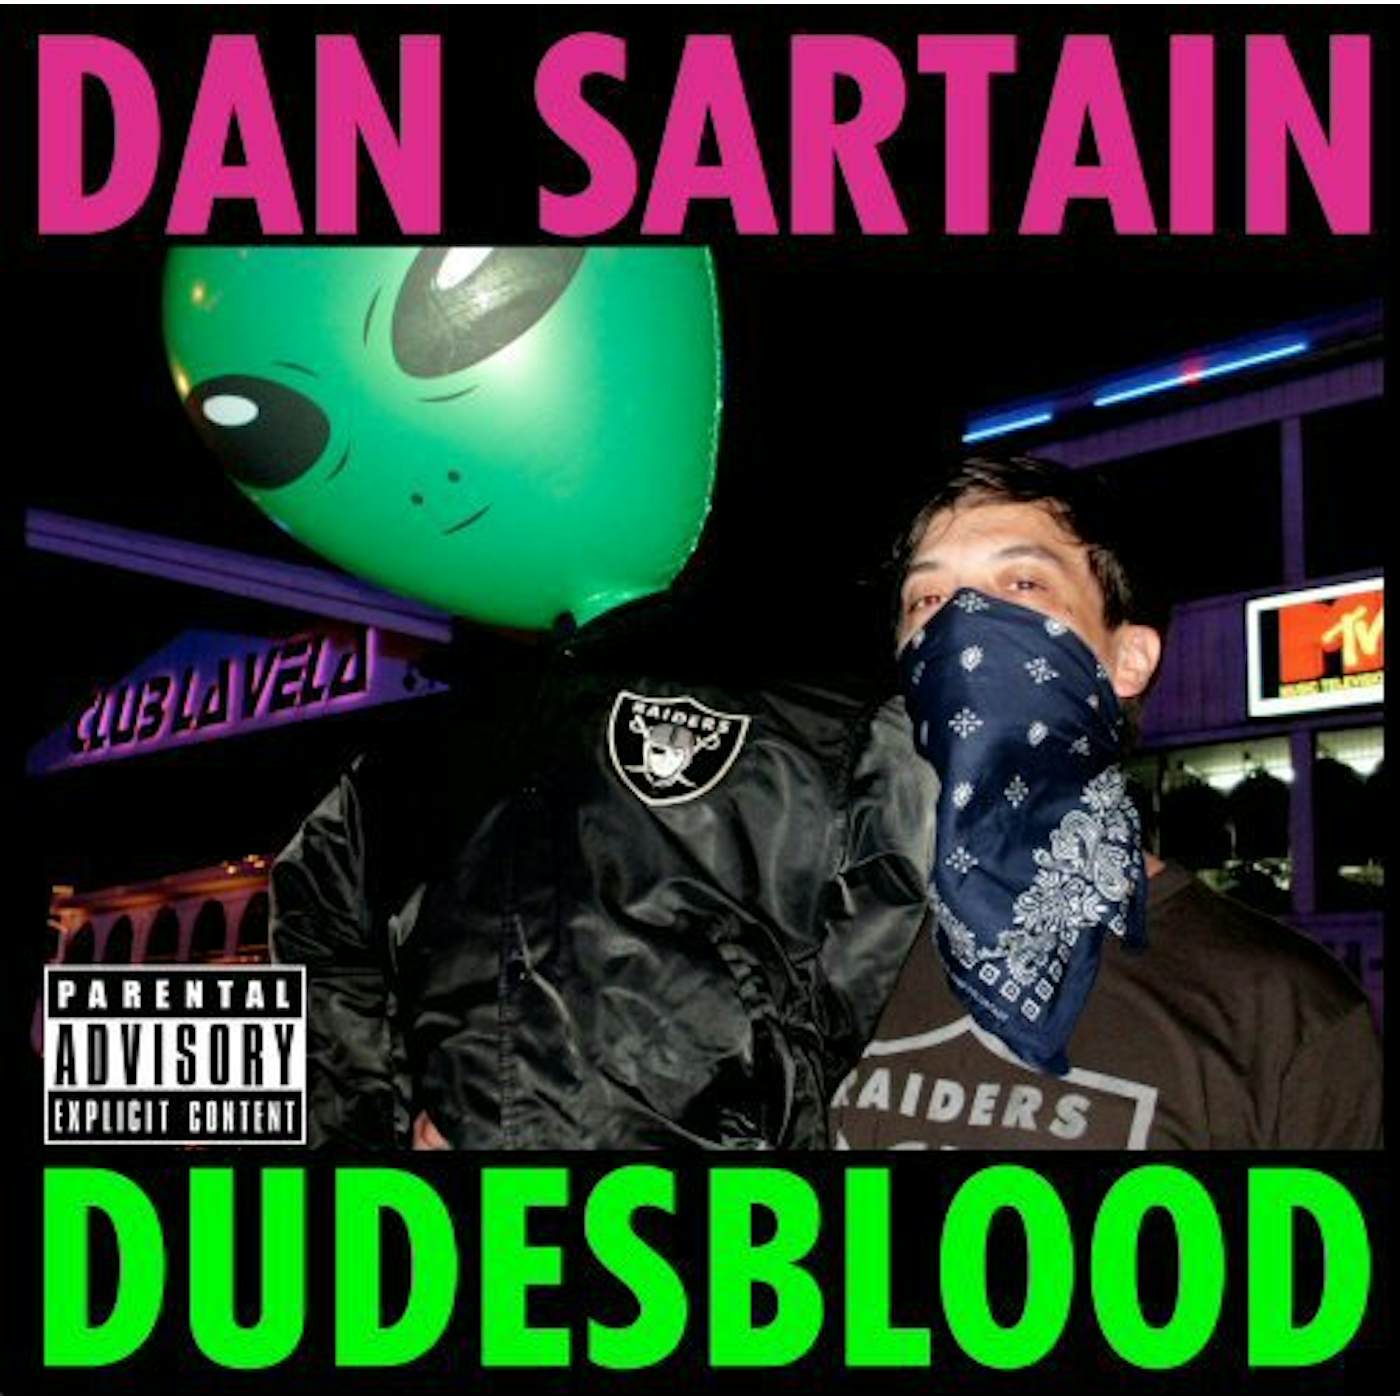 Dan Sartain Dudesblood Vinyl Record